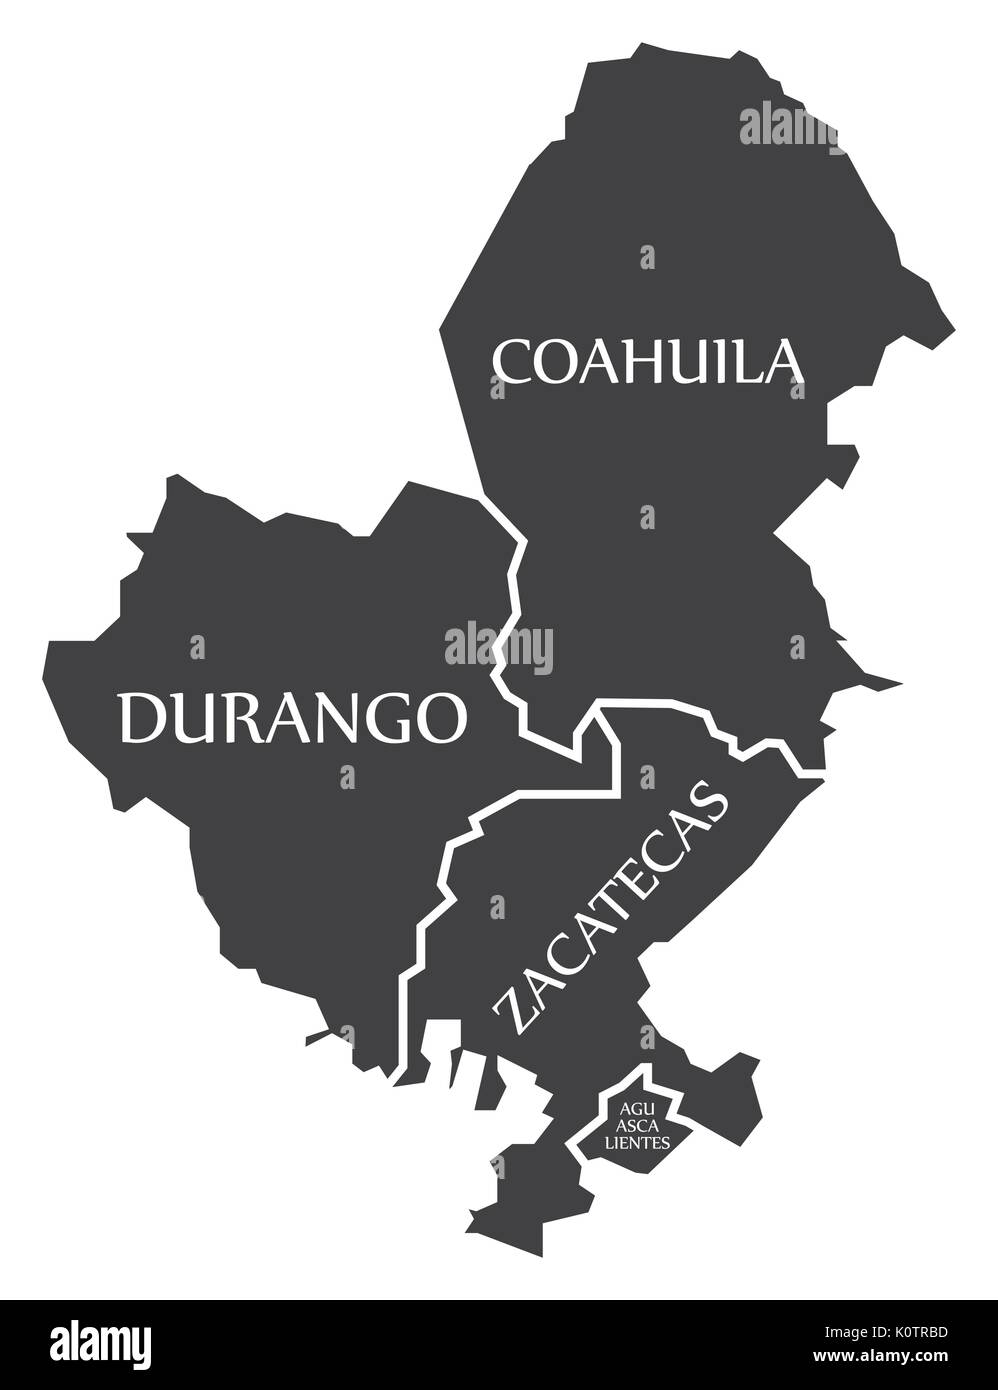 Durango - Coahuila - Zacatecas - Aguascalientes Map Mexico illustration Stock Vector